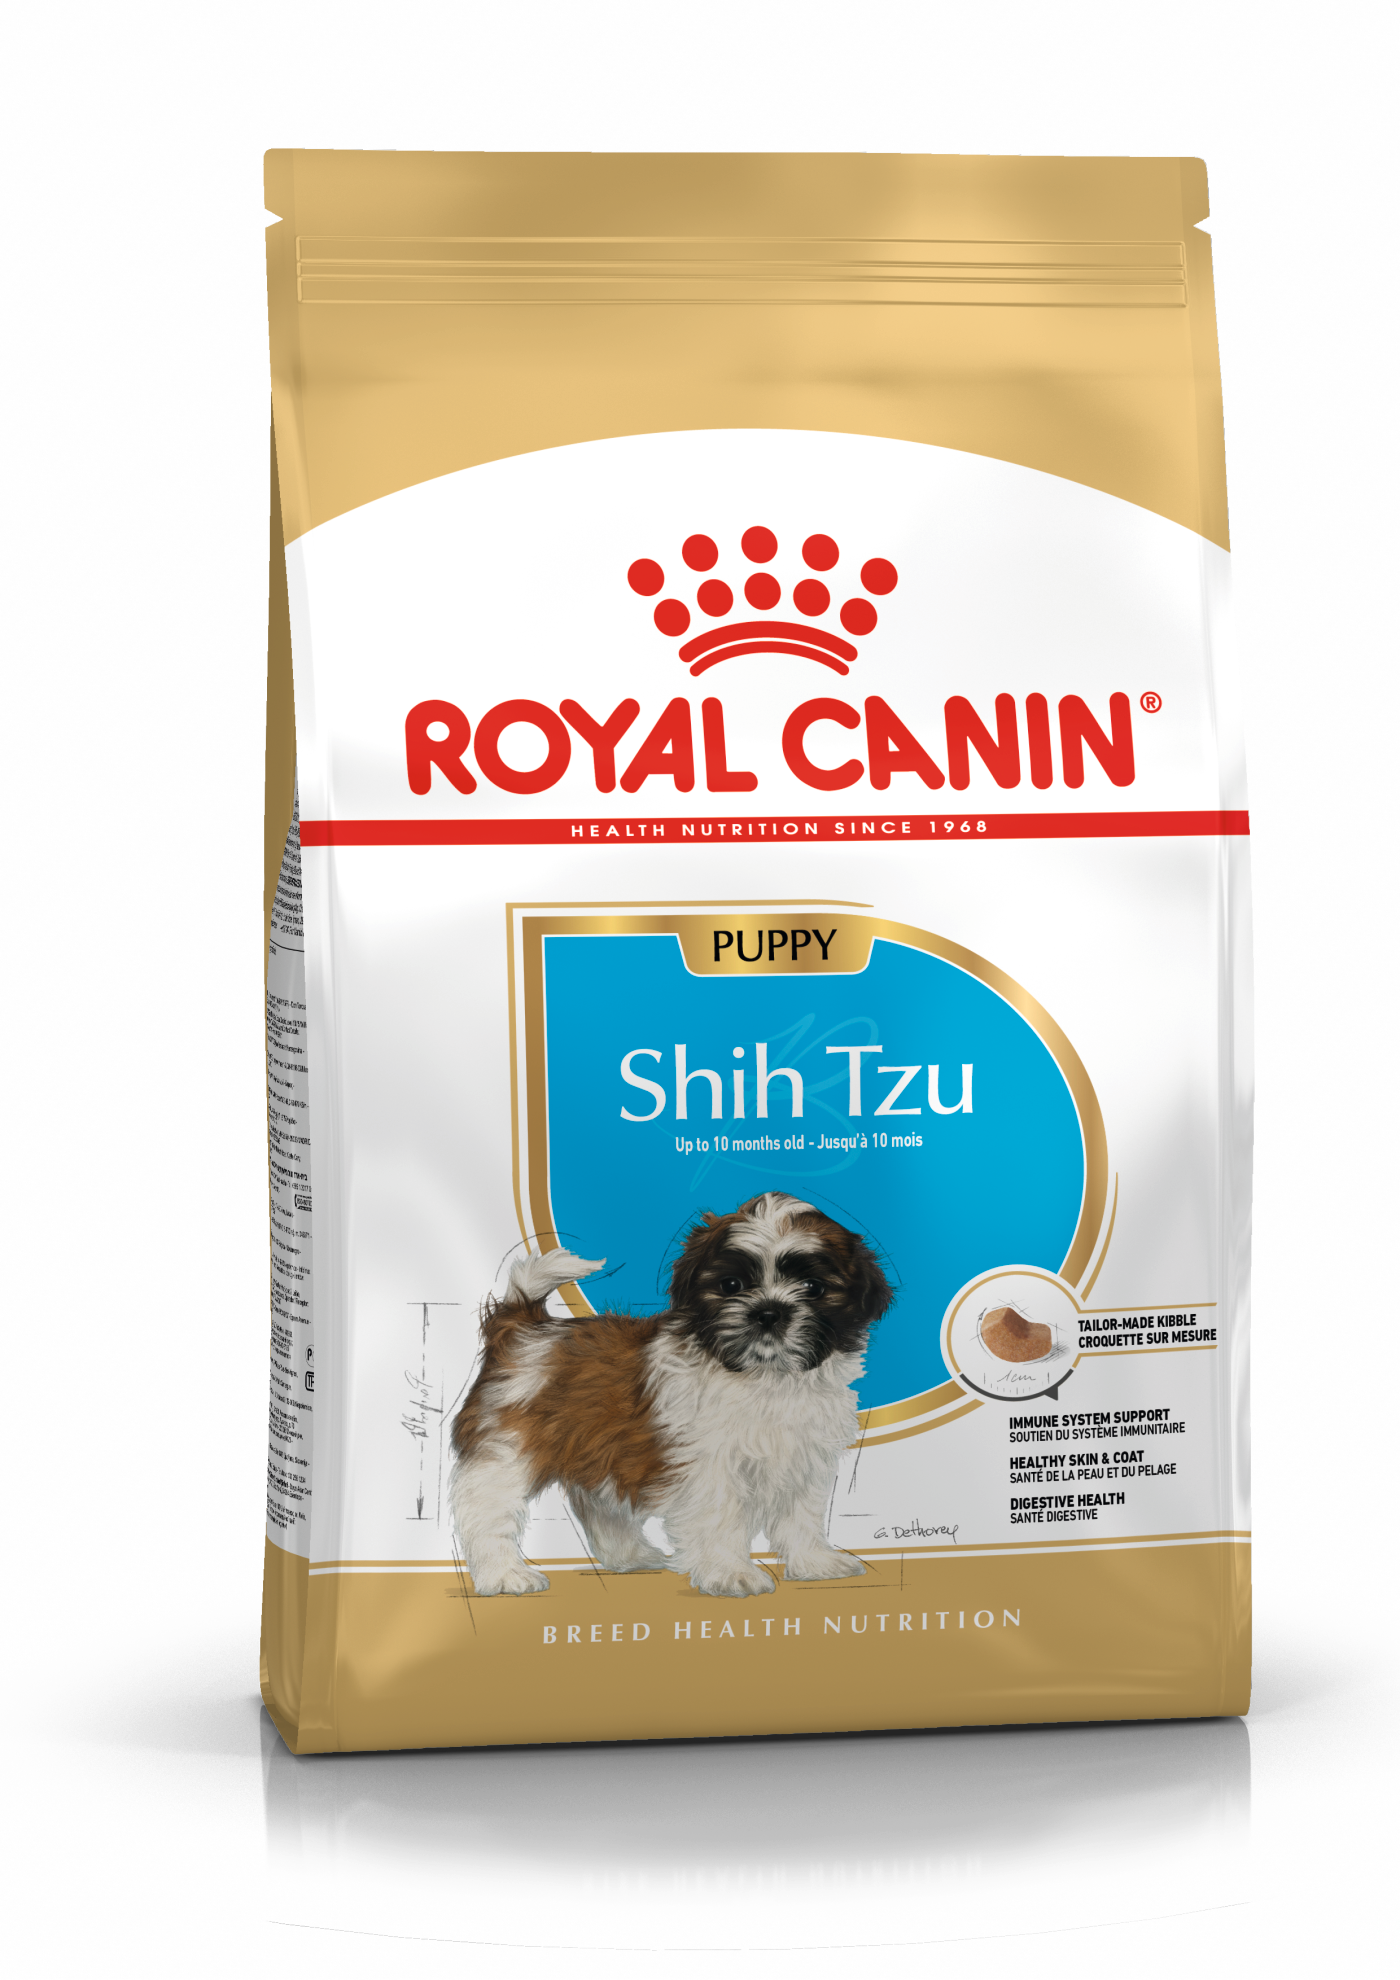 vitamins for shih tzu puppy